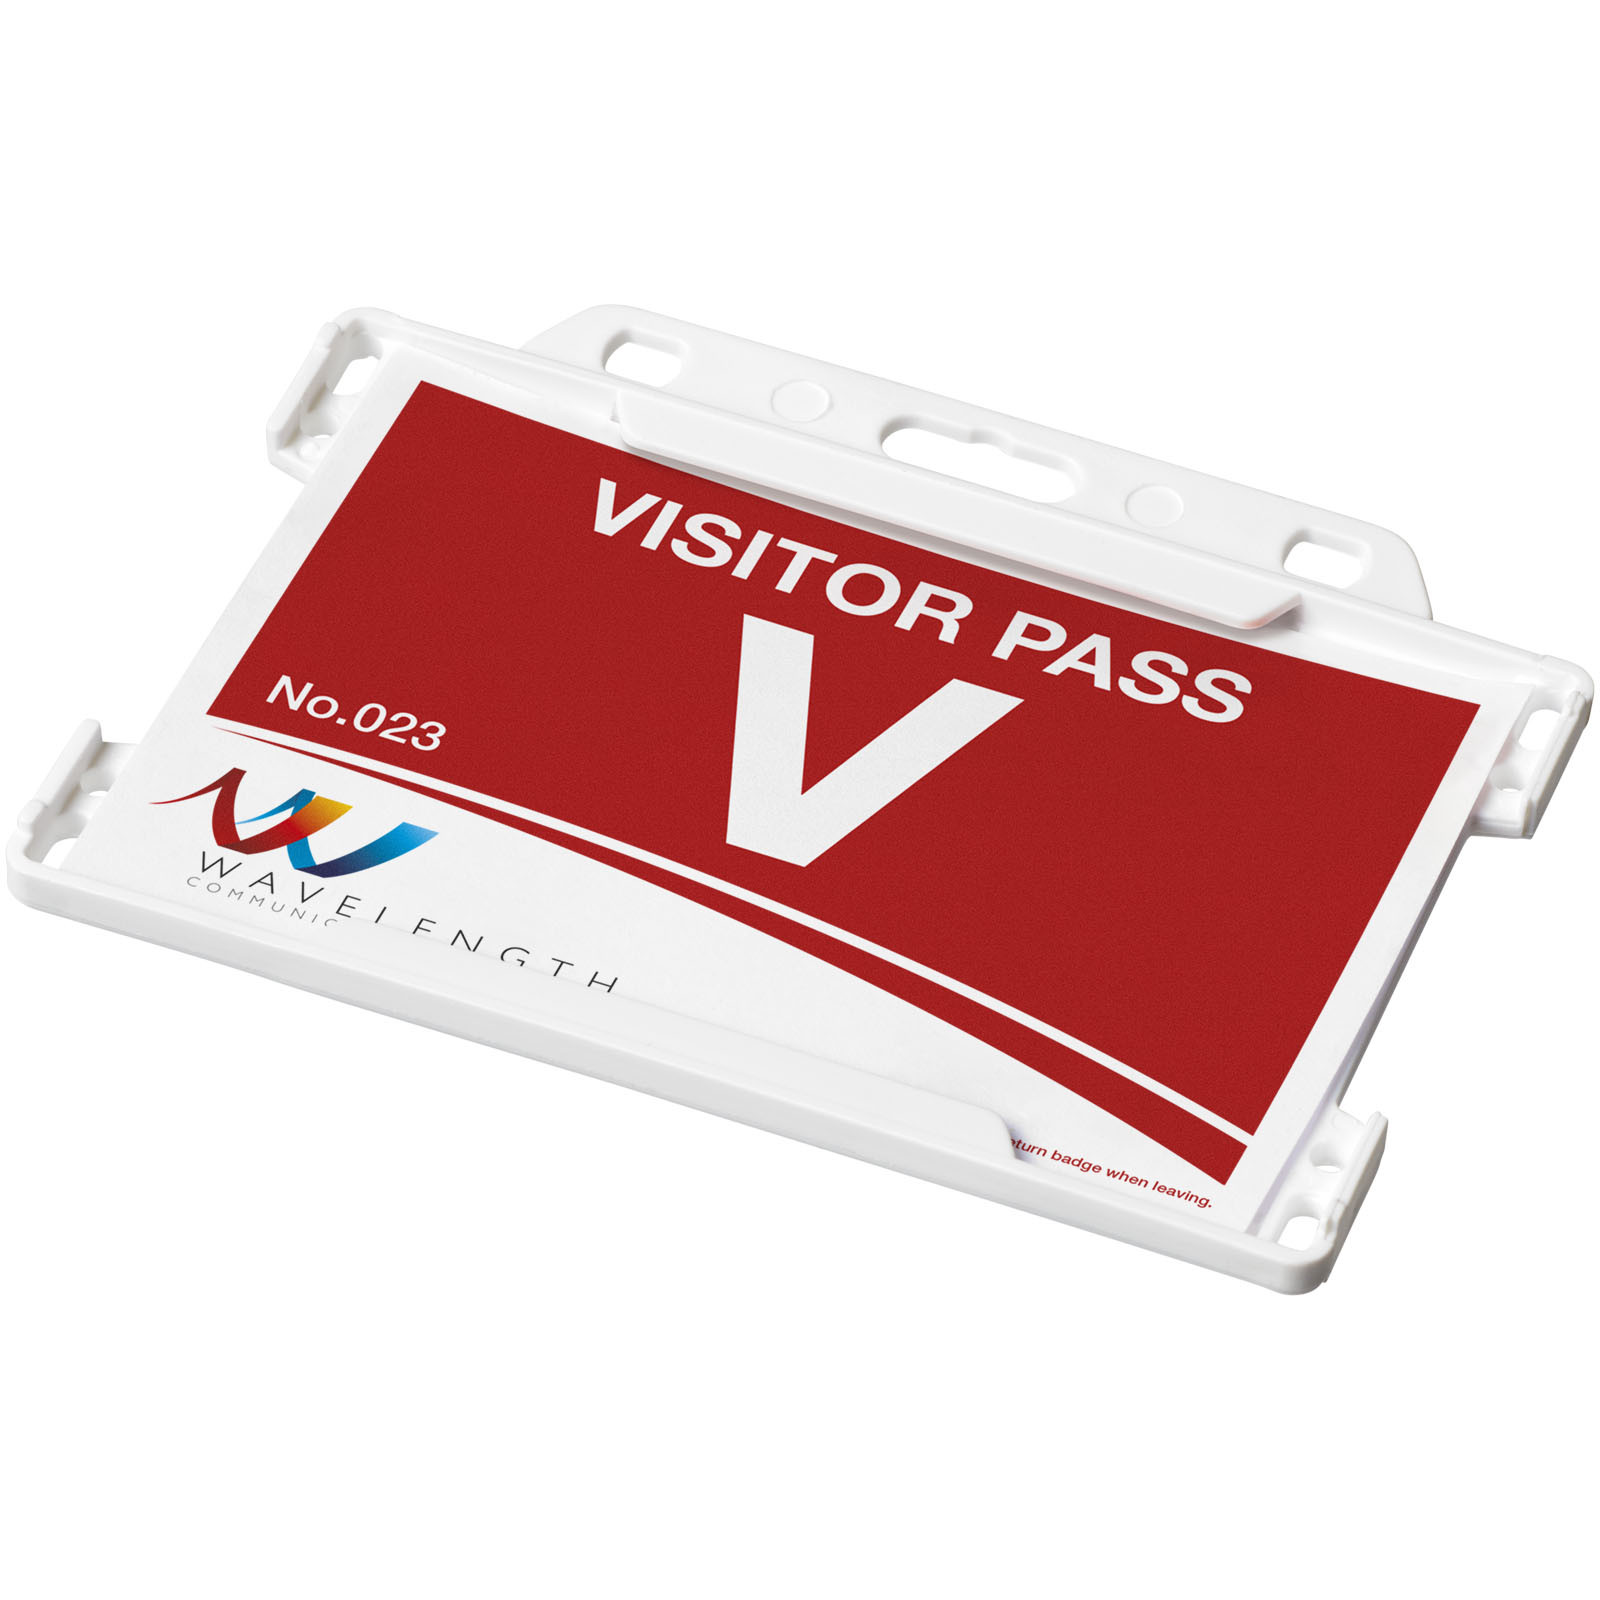 Porta badge in plastica riciclata Vega